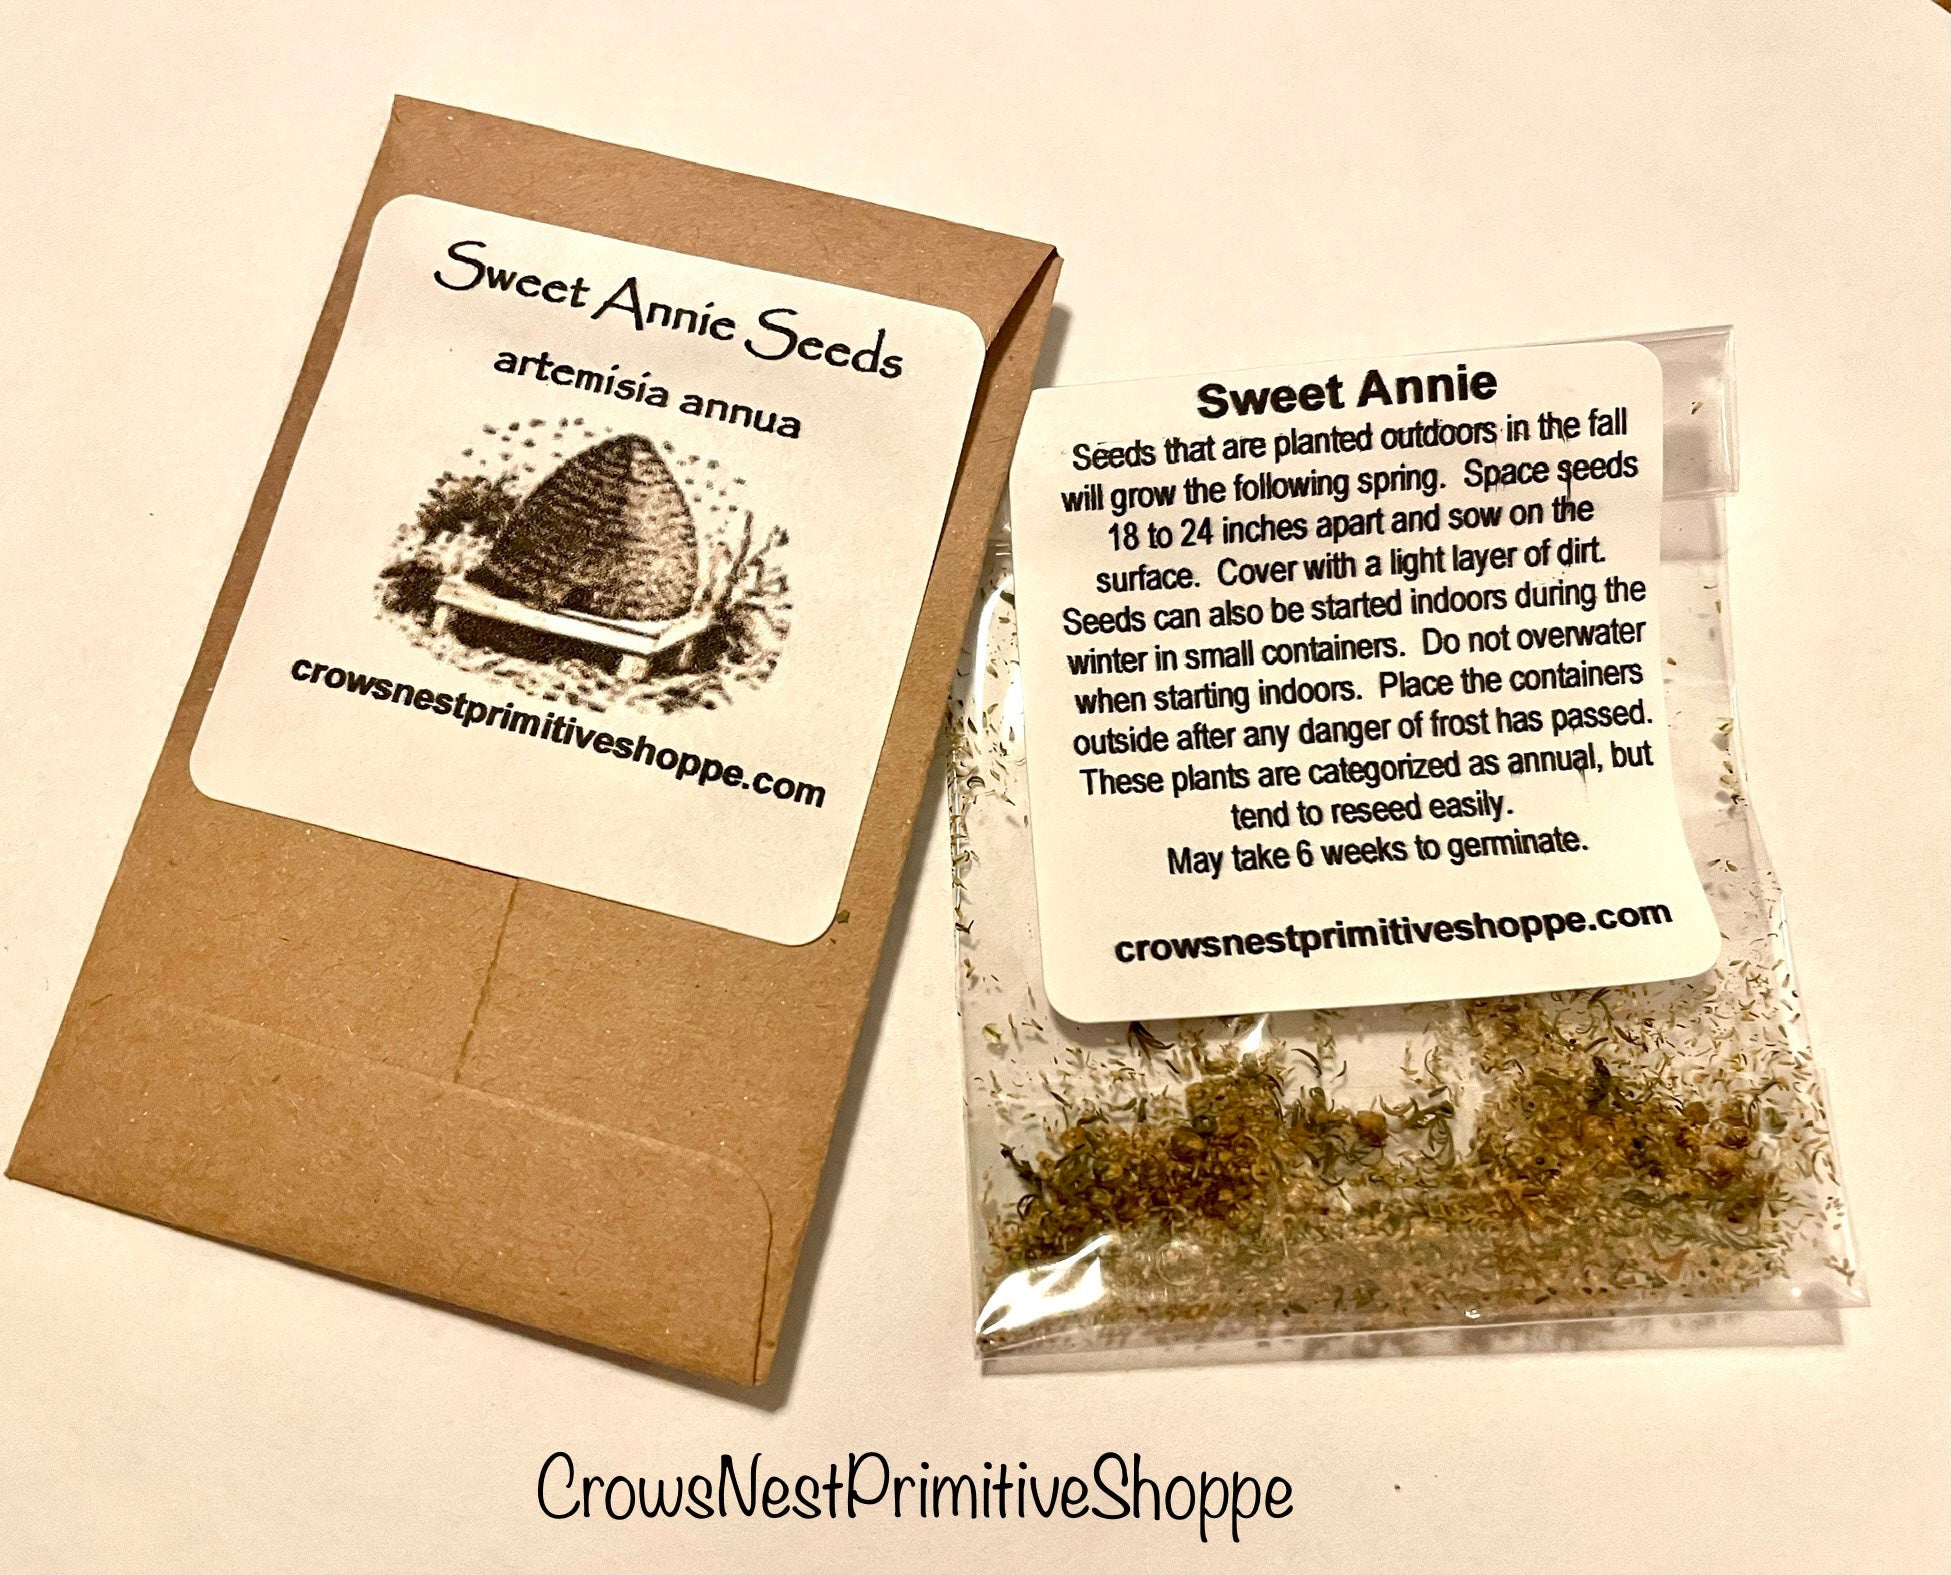 Sweet Annie Seeds